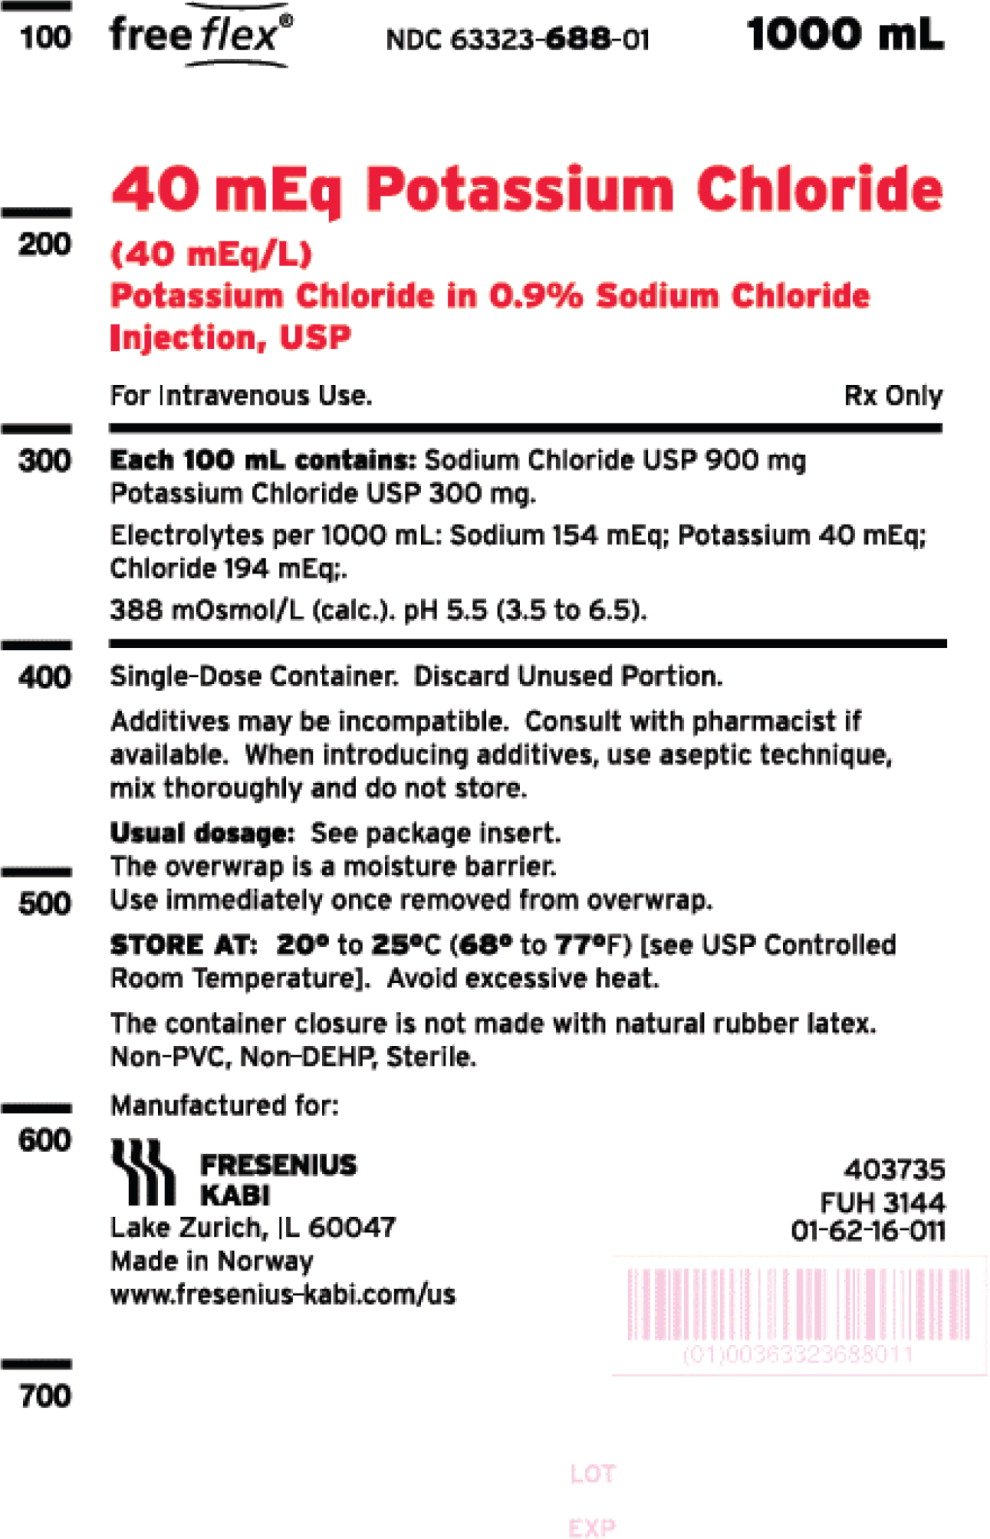 PACKAGE LABEL - PRINCIPAL DISPLAY – Potassium Chloride in 0.9% Sodium Chloride Injection, USP Bag Label
